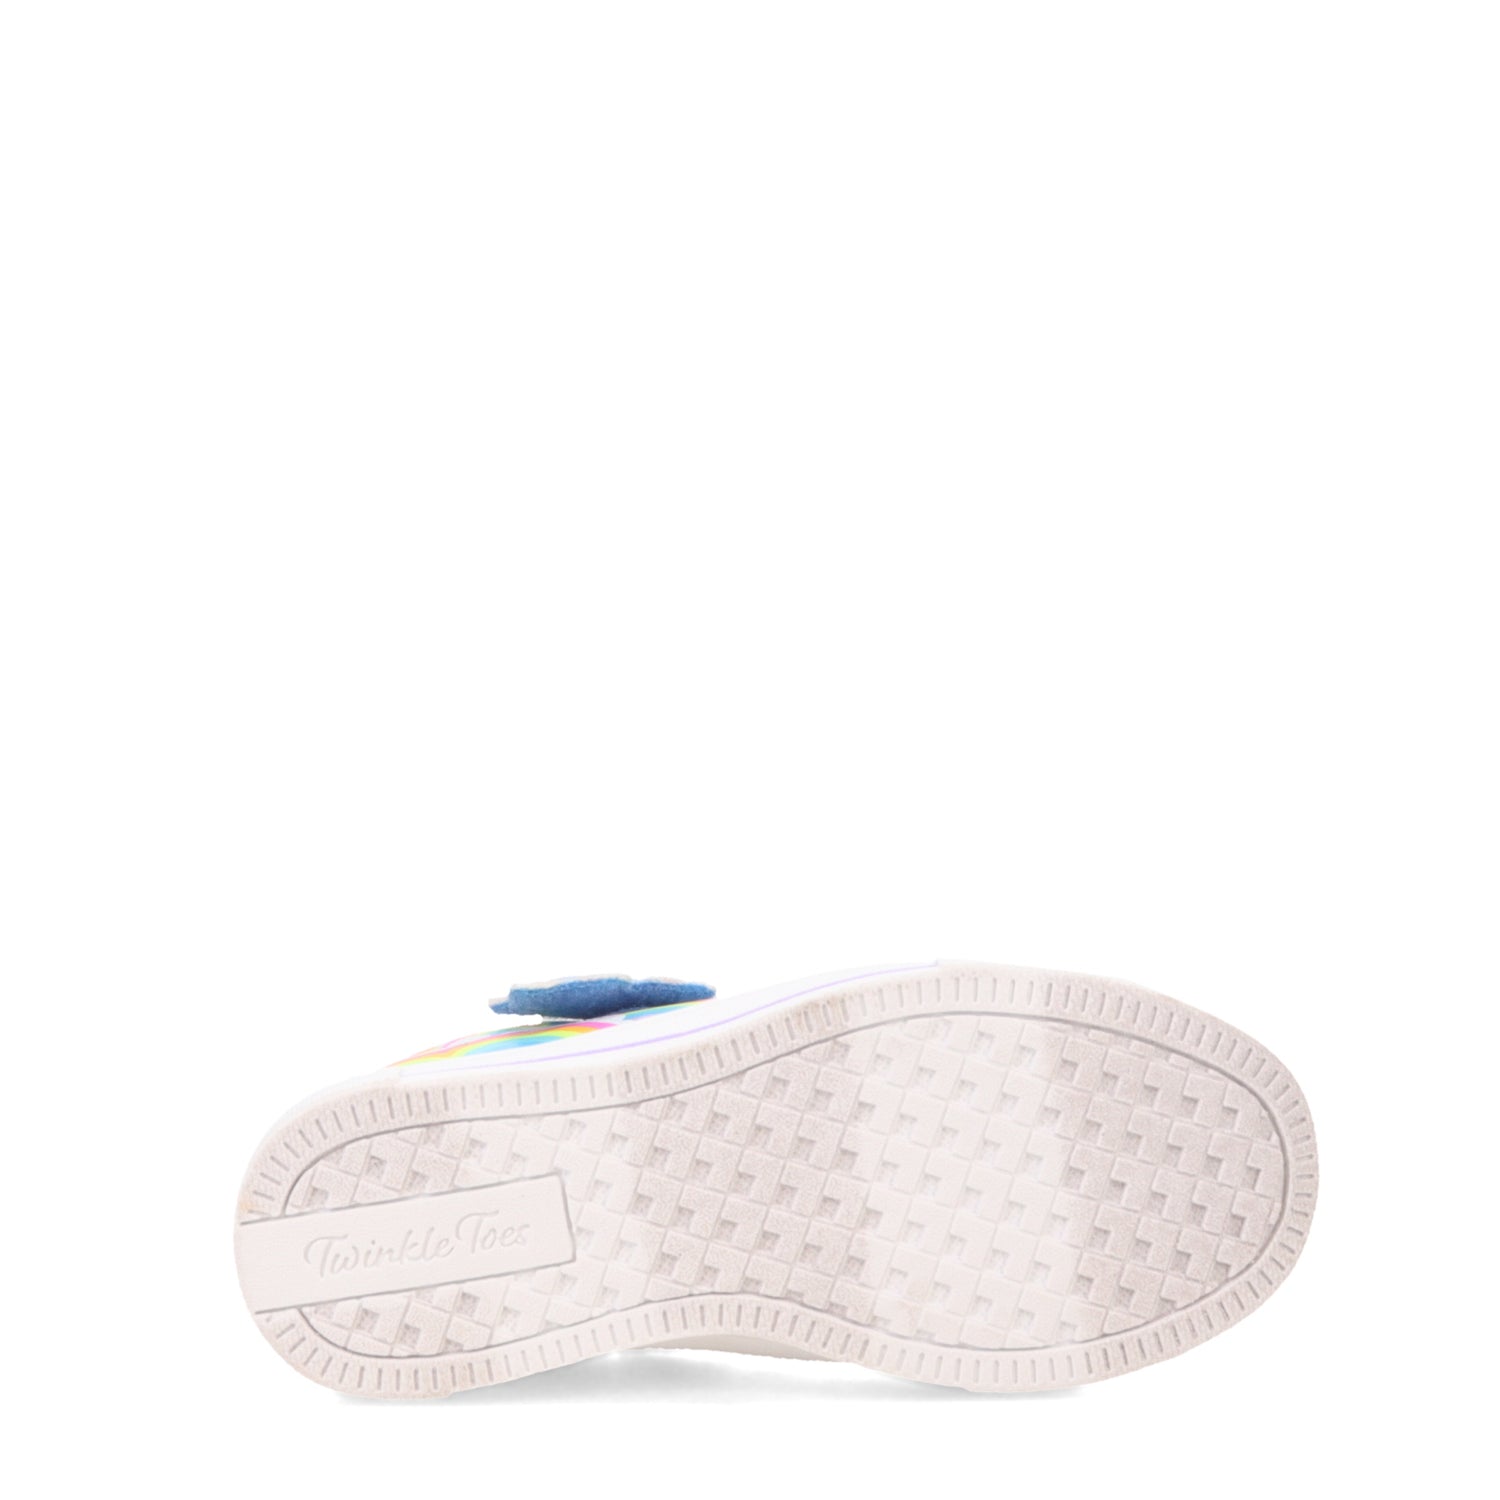 Peltz Shoes  Girl's Skechers Twinkle Toes: Twinkle Sparks - Jumpin' Clouds Sneaker - Toddler Blue Unicorn 314809N-BLMT